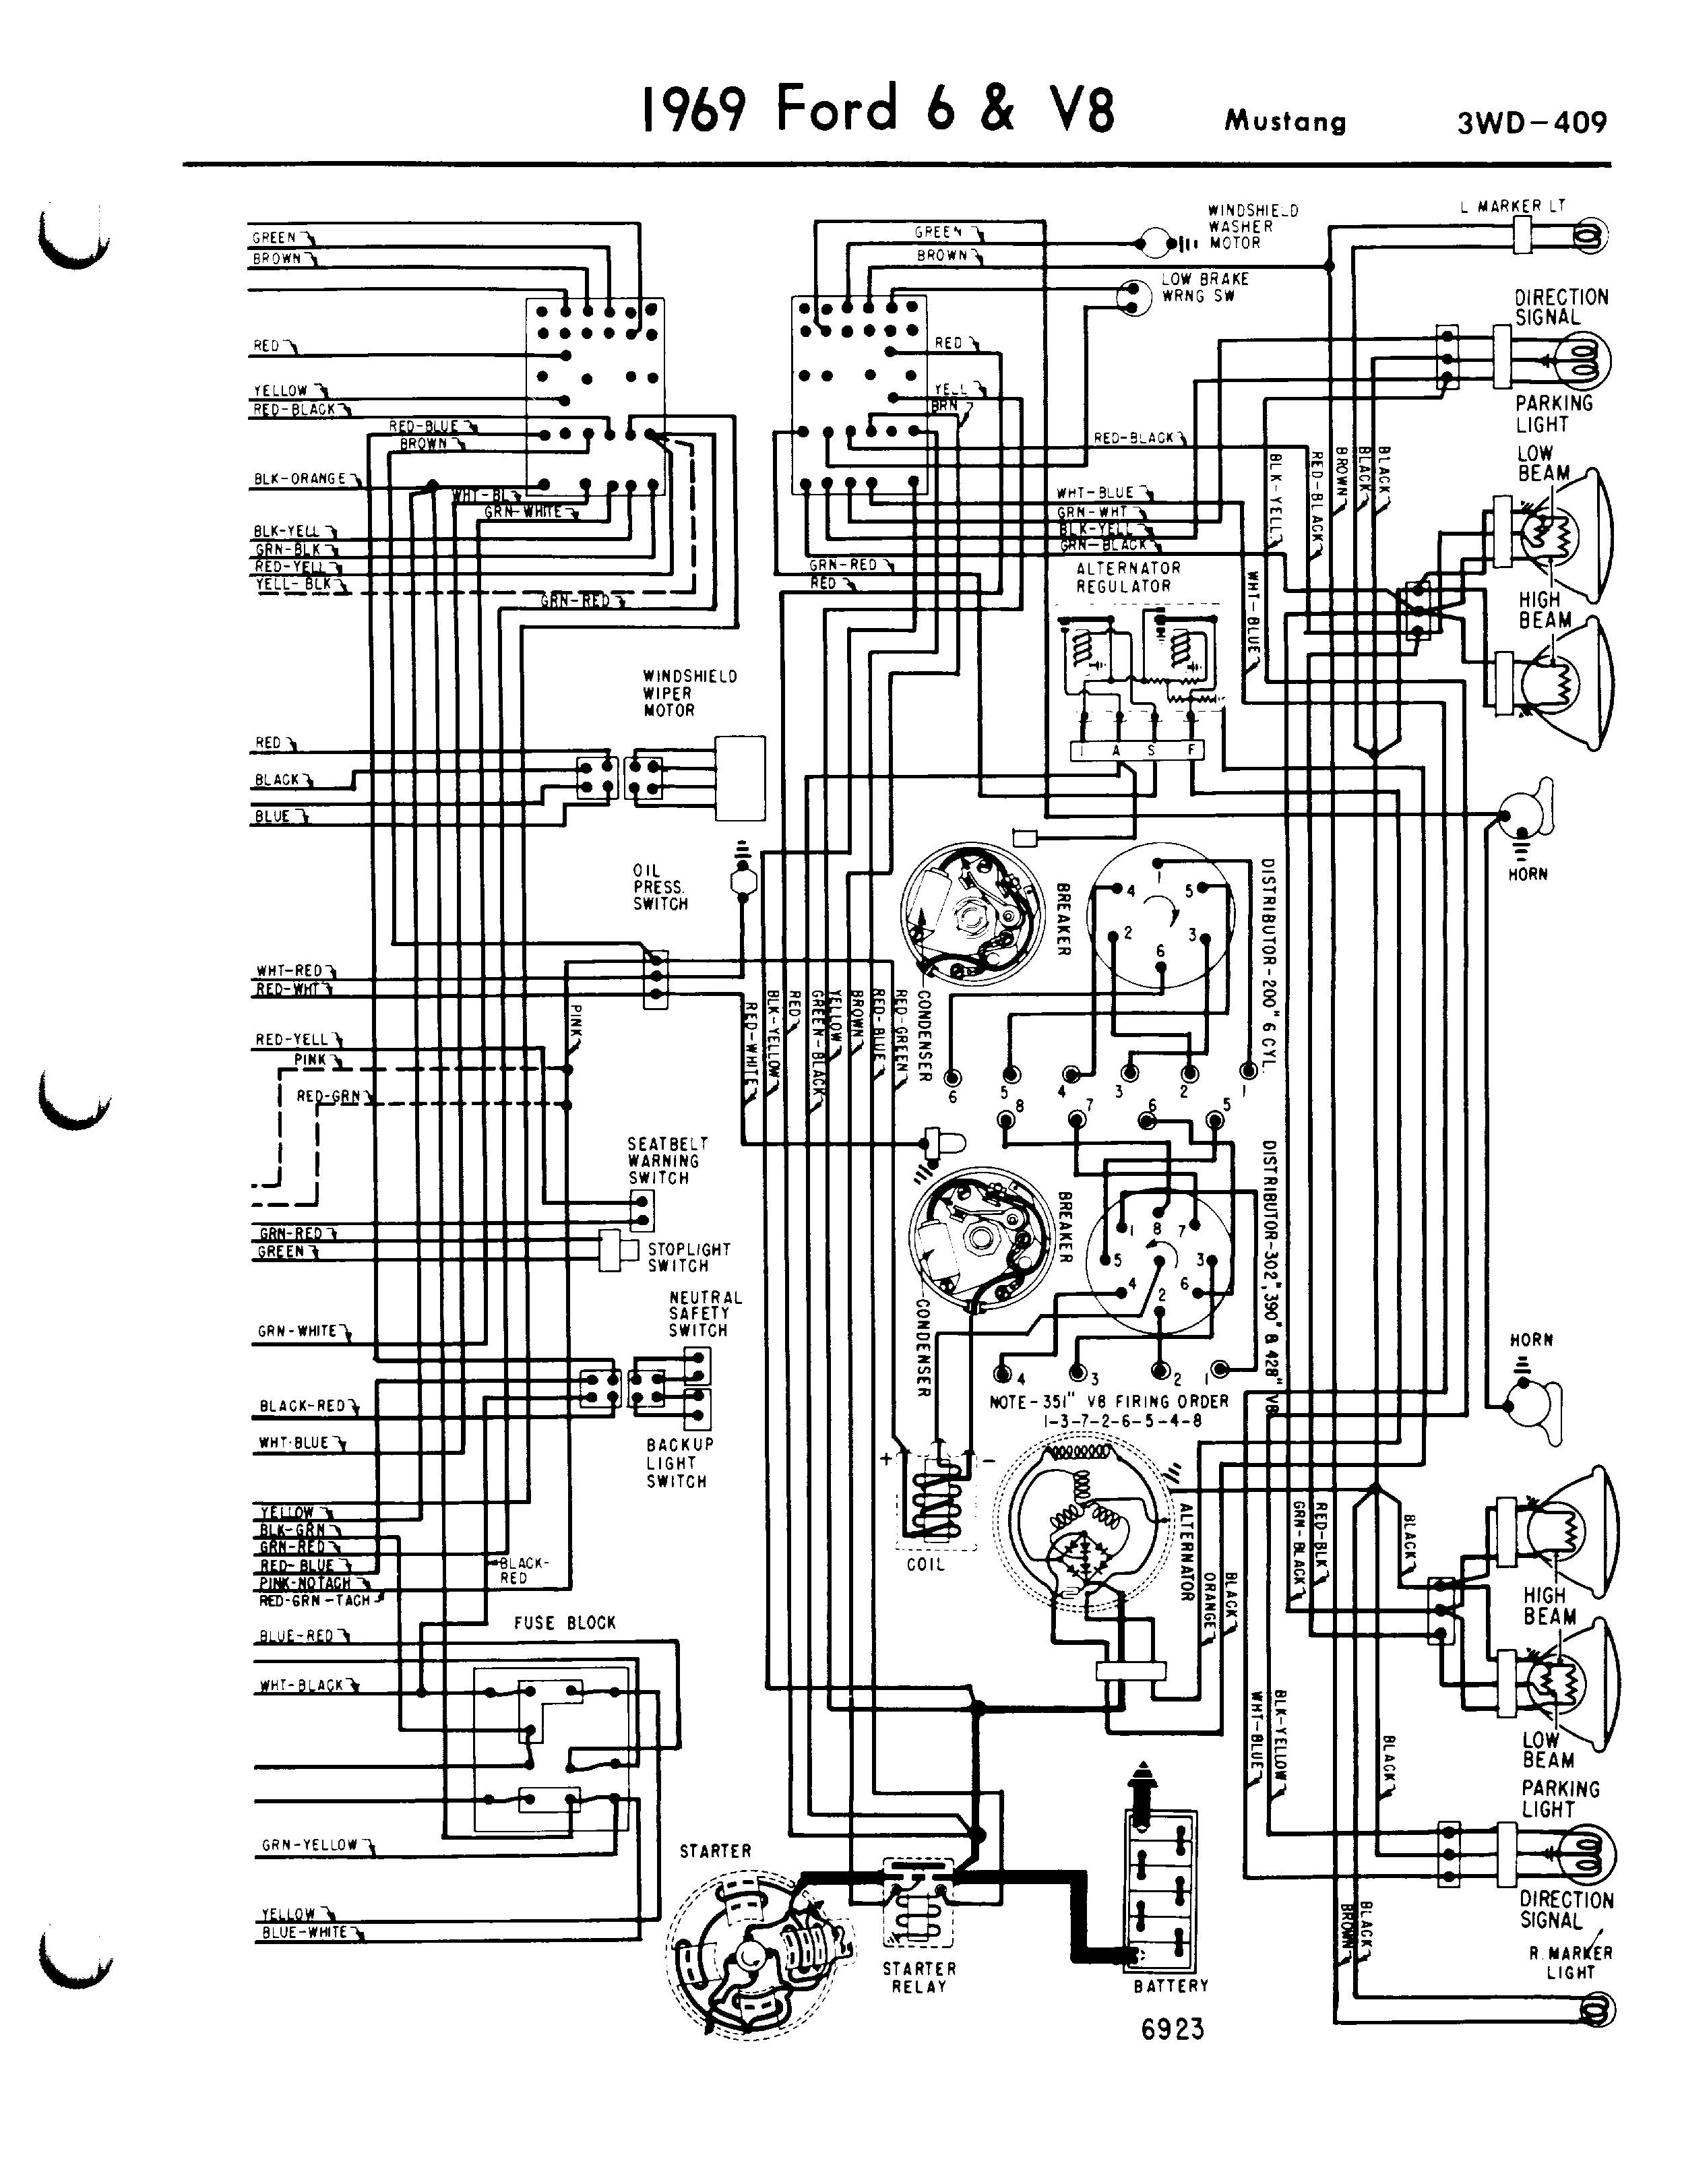 1969 Mustang Ignition Wiring Diagram Wiring Diagram